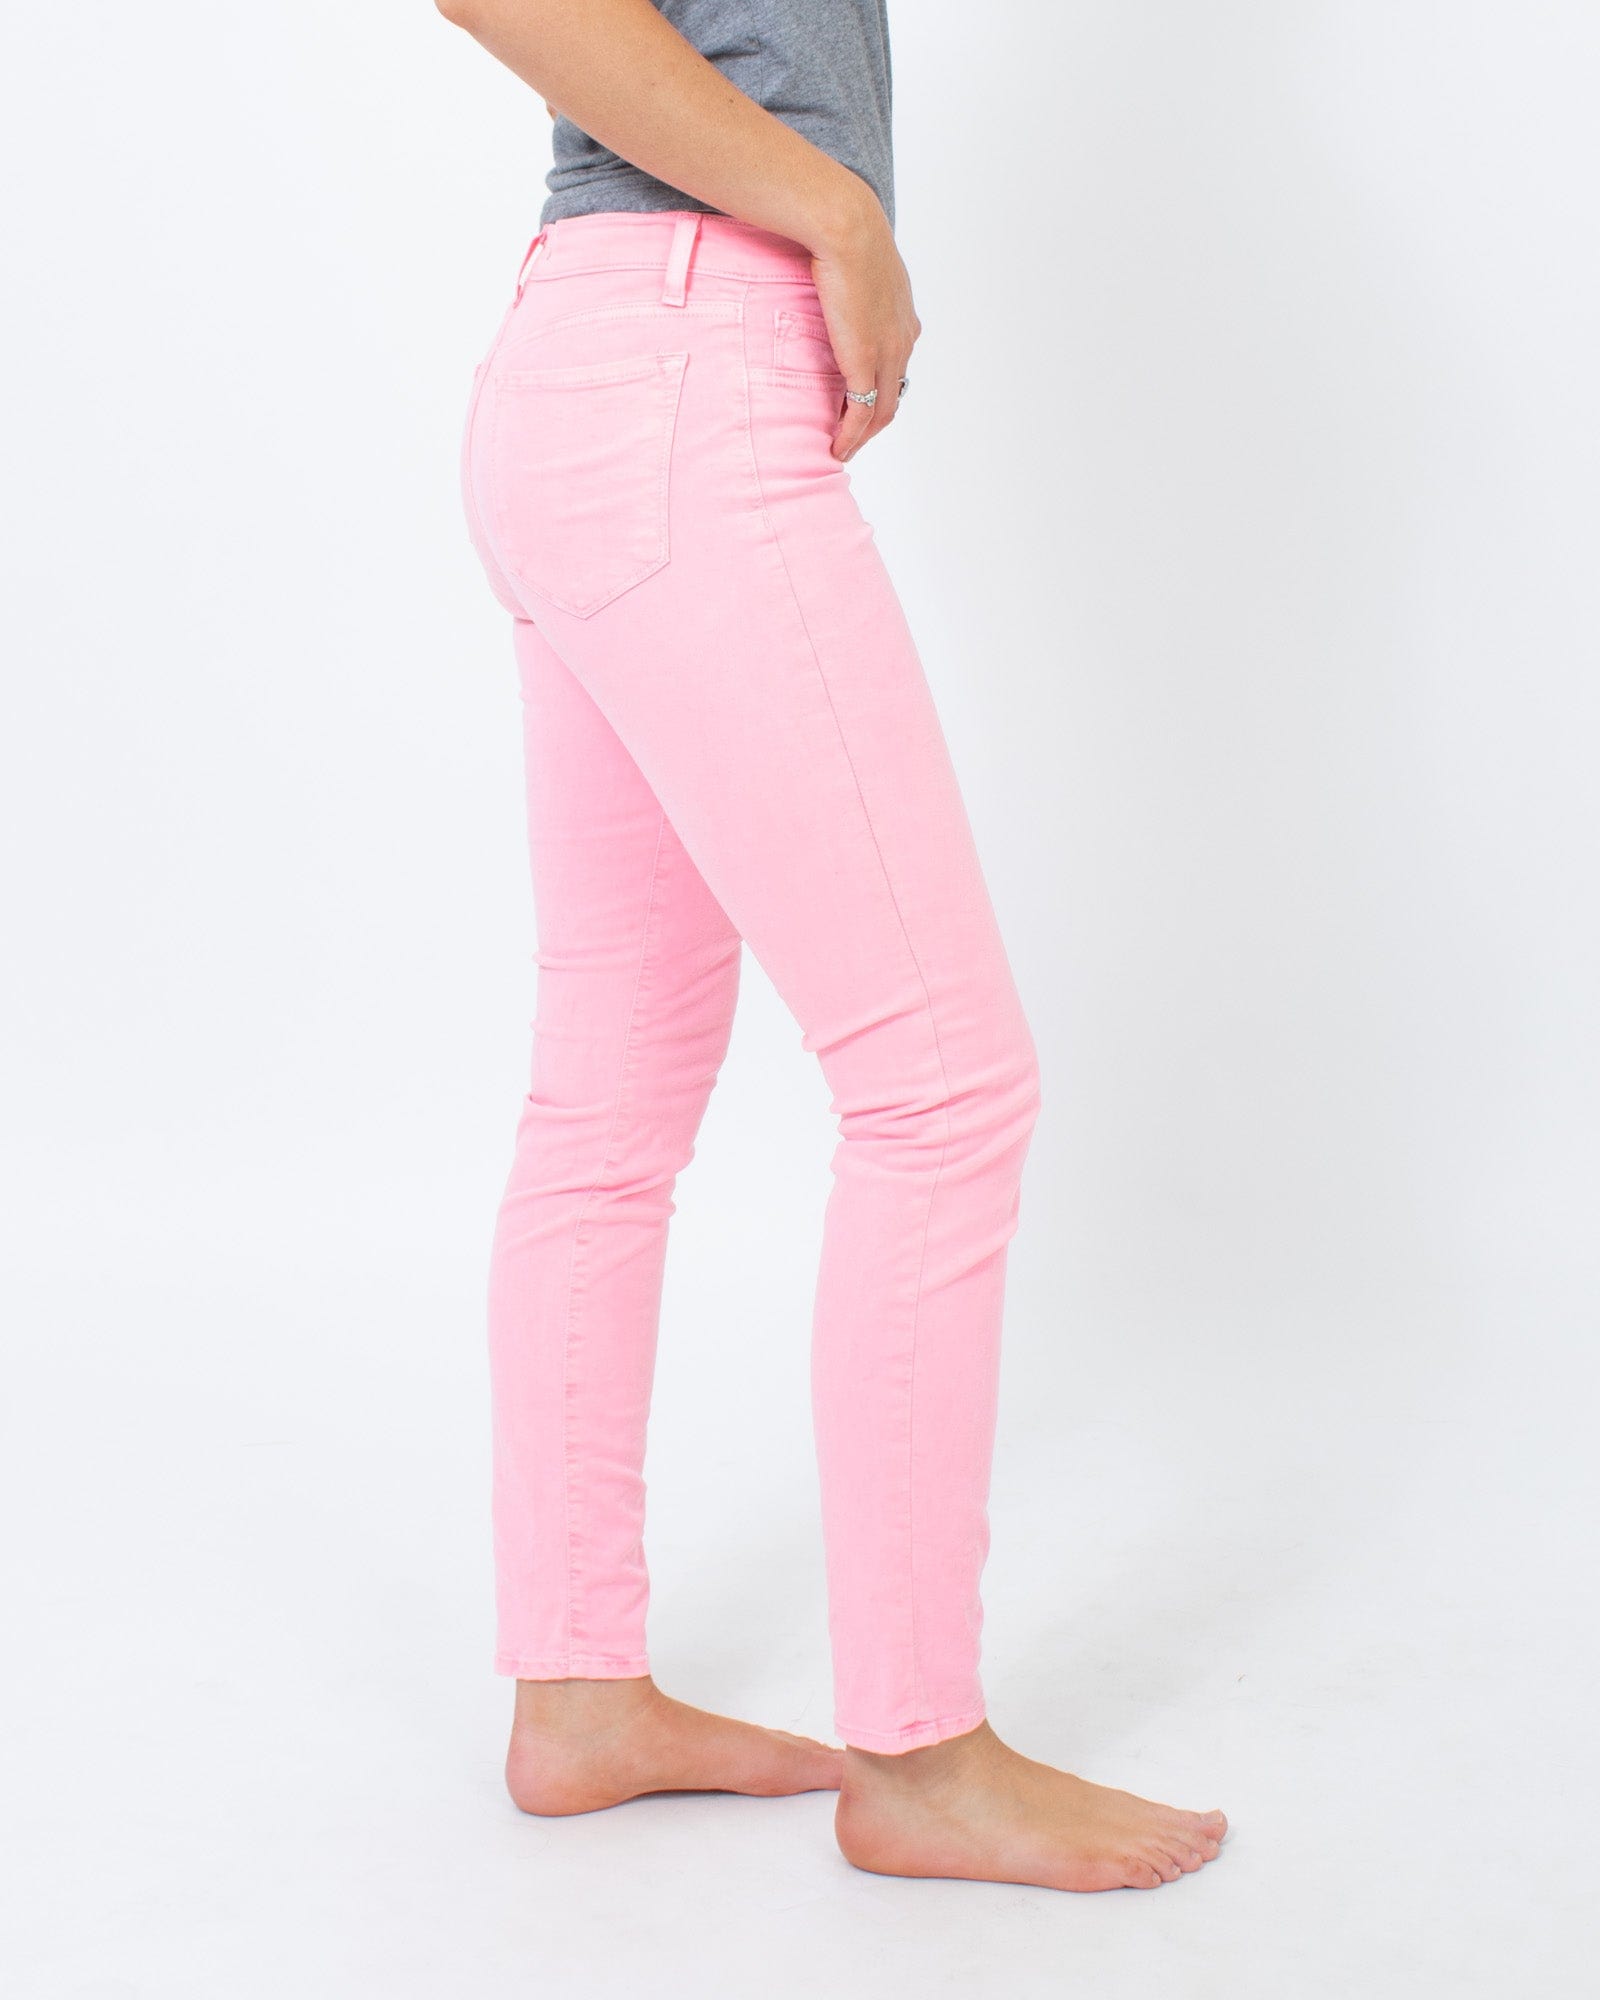 Neon Pink Skinny Leg Jeans - The Revury